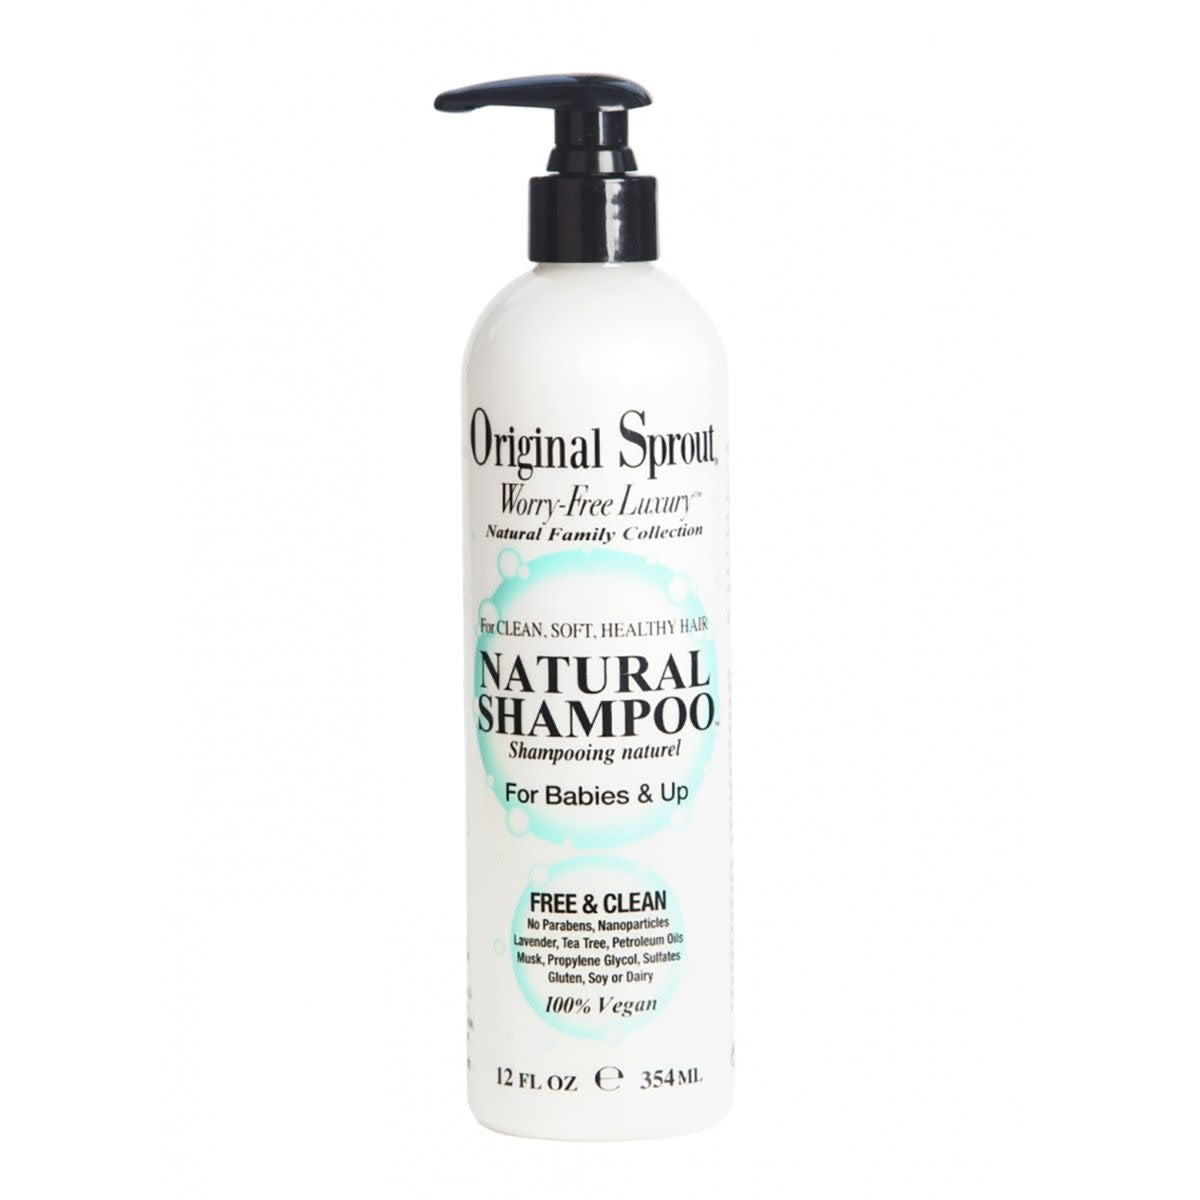 Original sprout natural shampoo